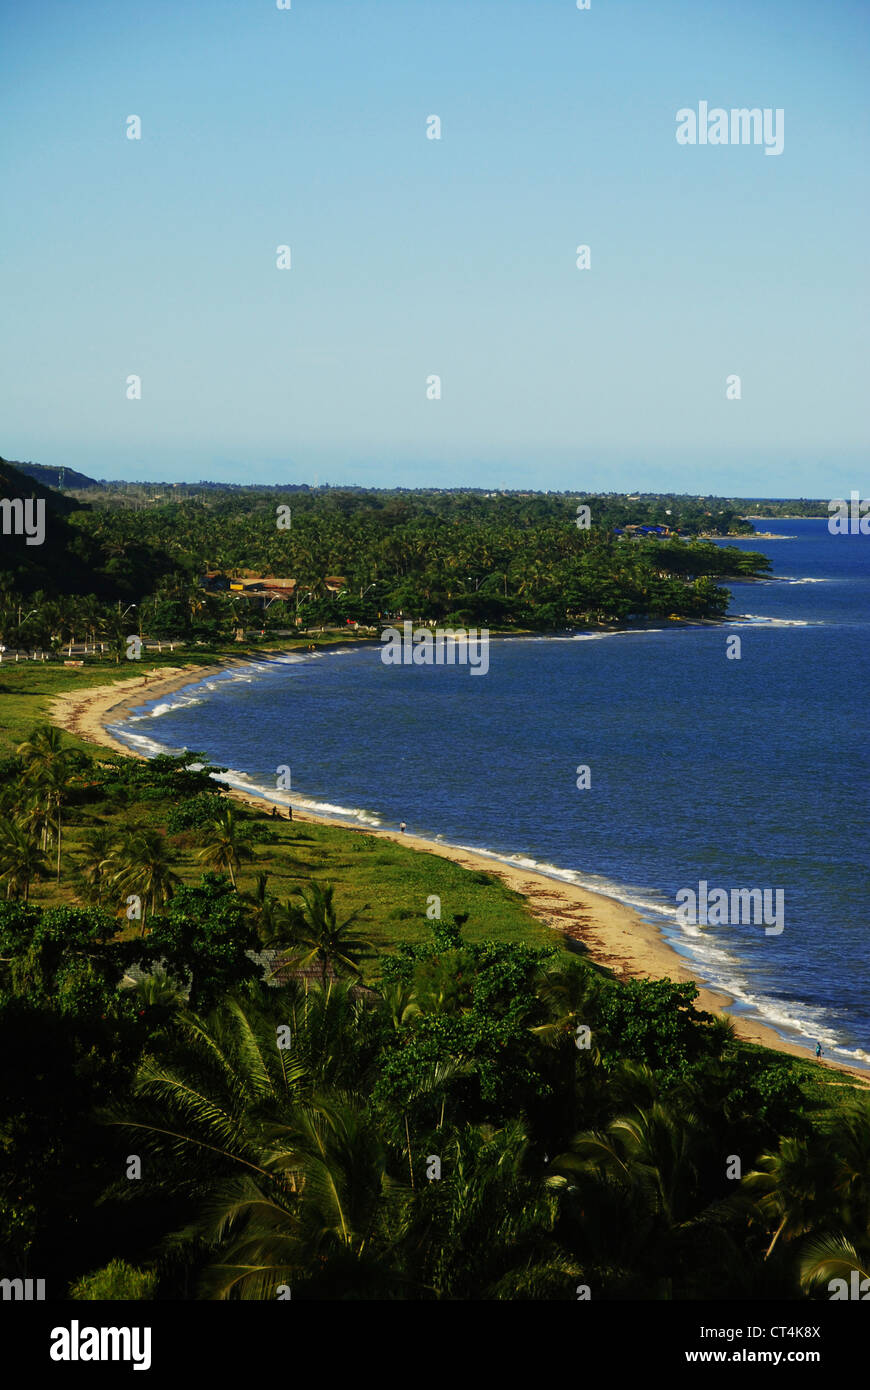 Brazil, Bahia, Porto Seguro, Arraial d'Ajuda, view on the bay with palm trees Stock Photo